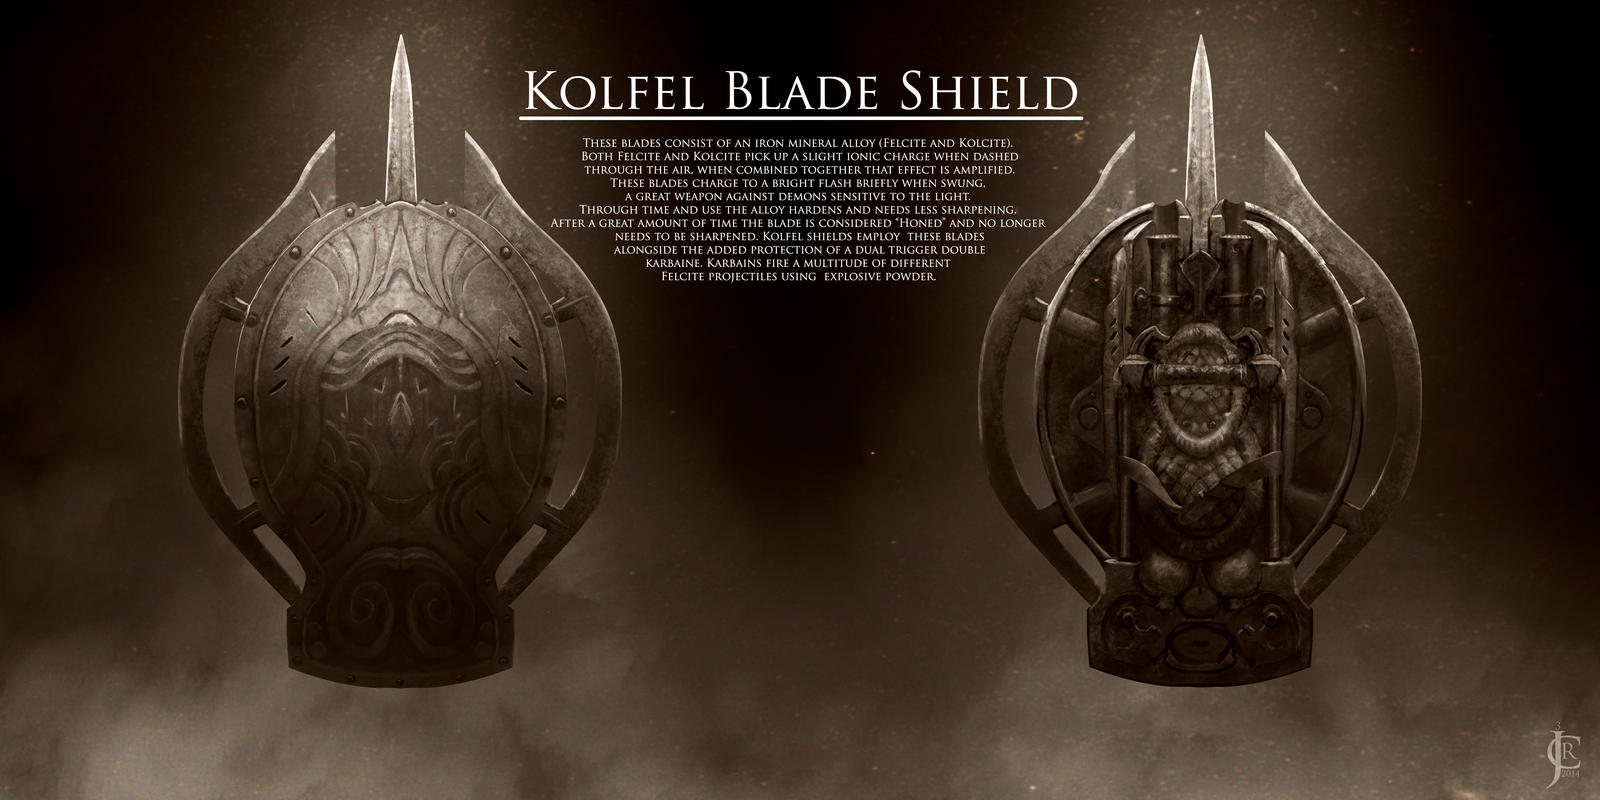 Kolfel Blade Shield